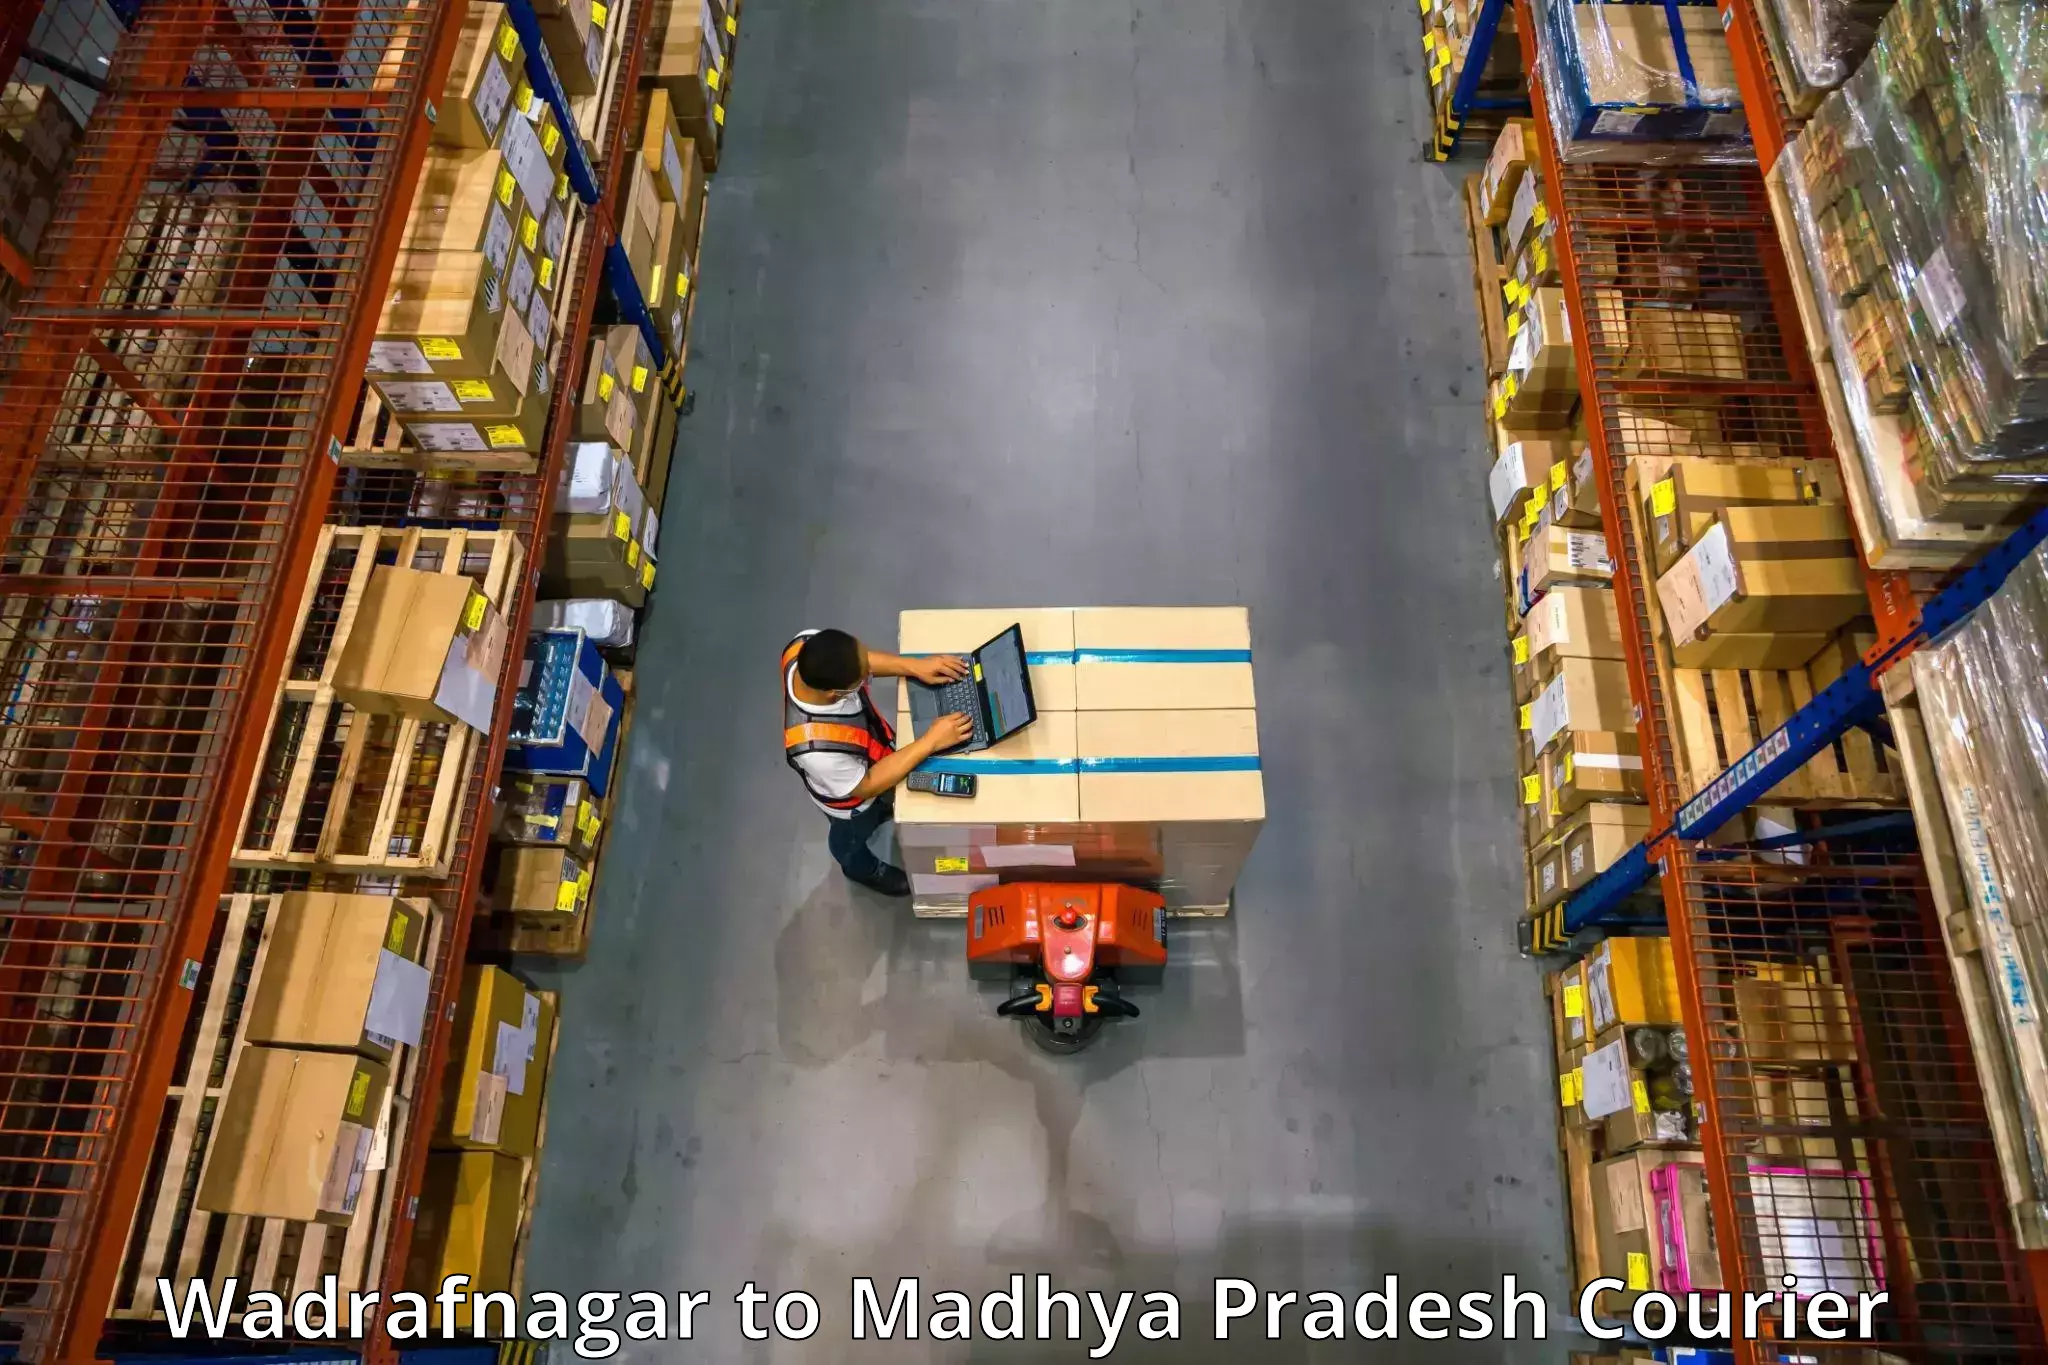 Furniture relocation experts Wadrafnagar to Sleemanabad